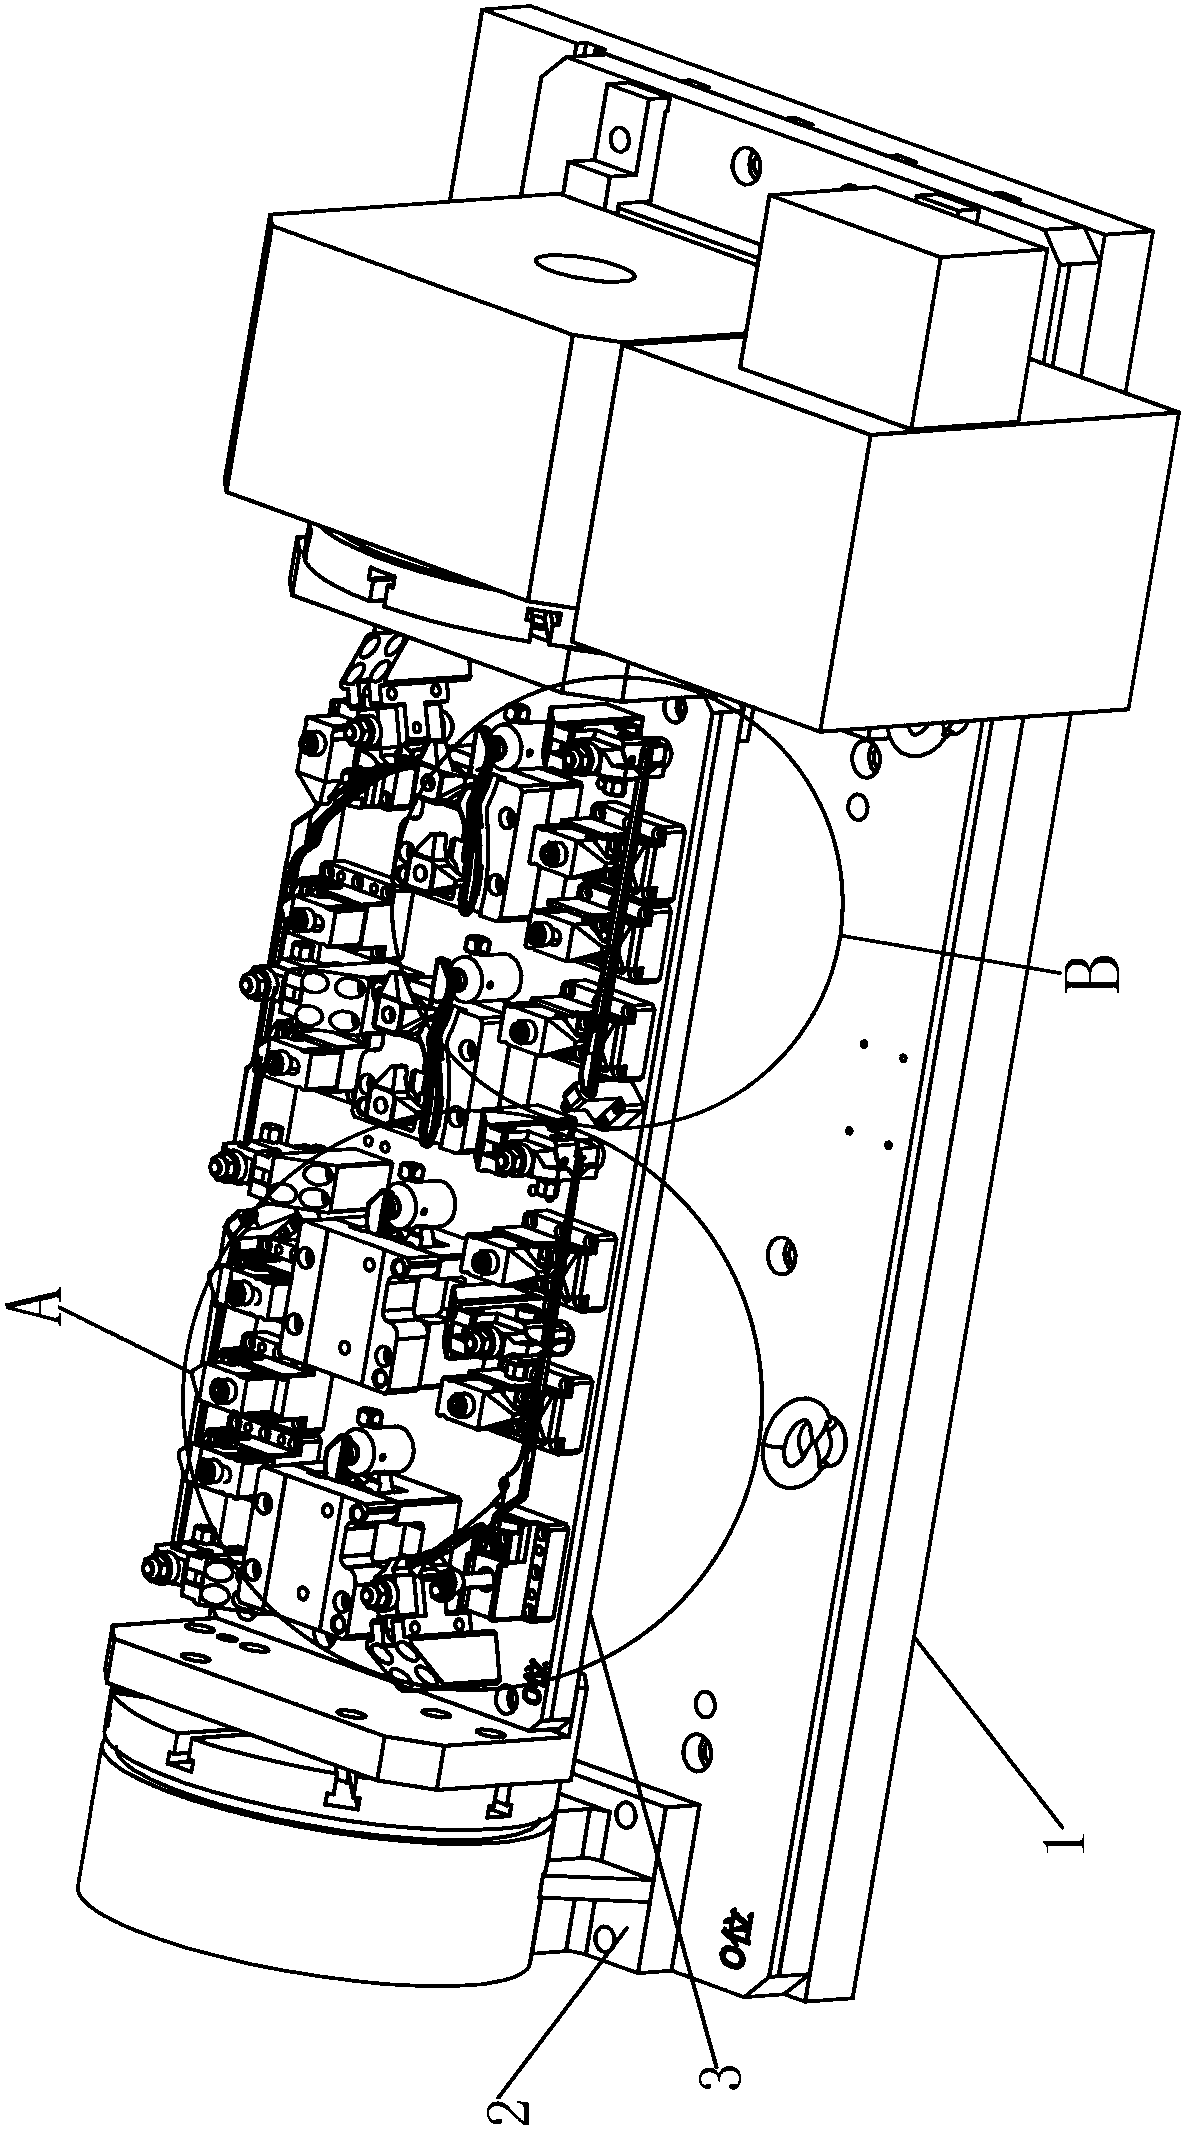 Vertebral plate rongeur machining clamp